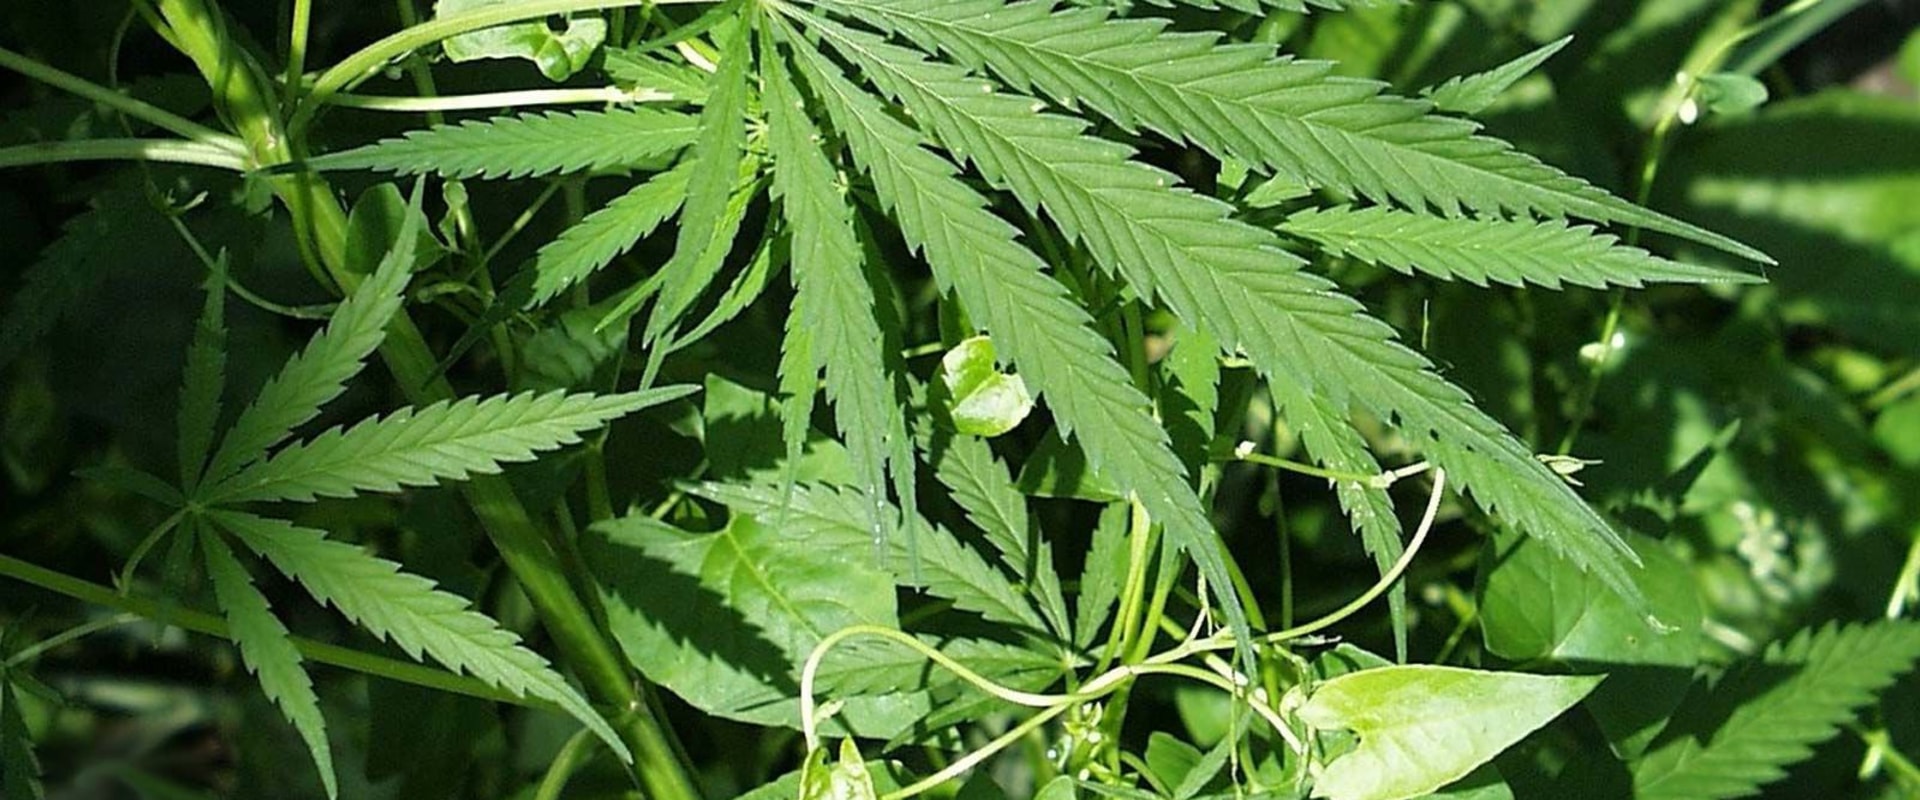 What type of drug is hemp plant?